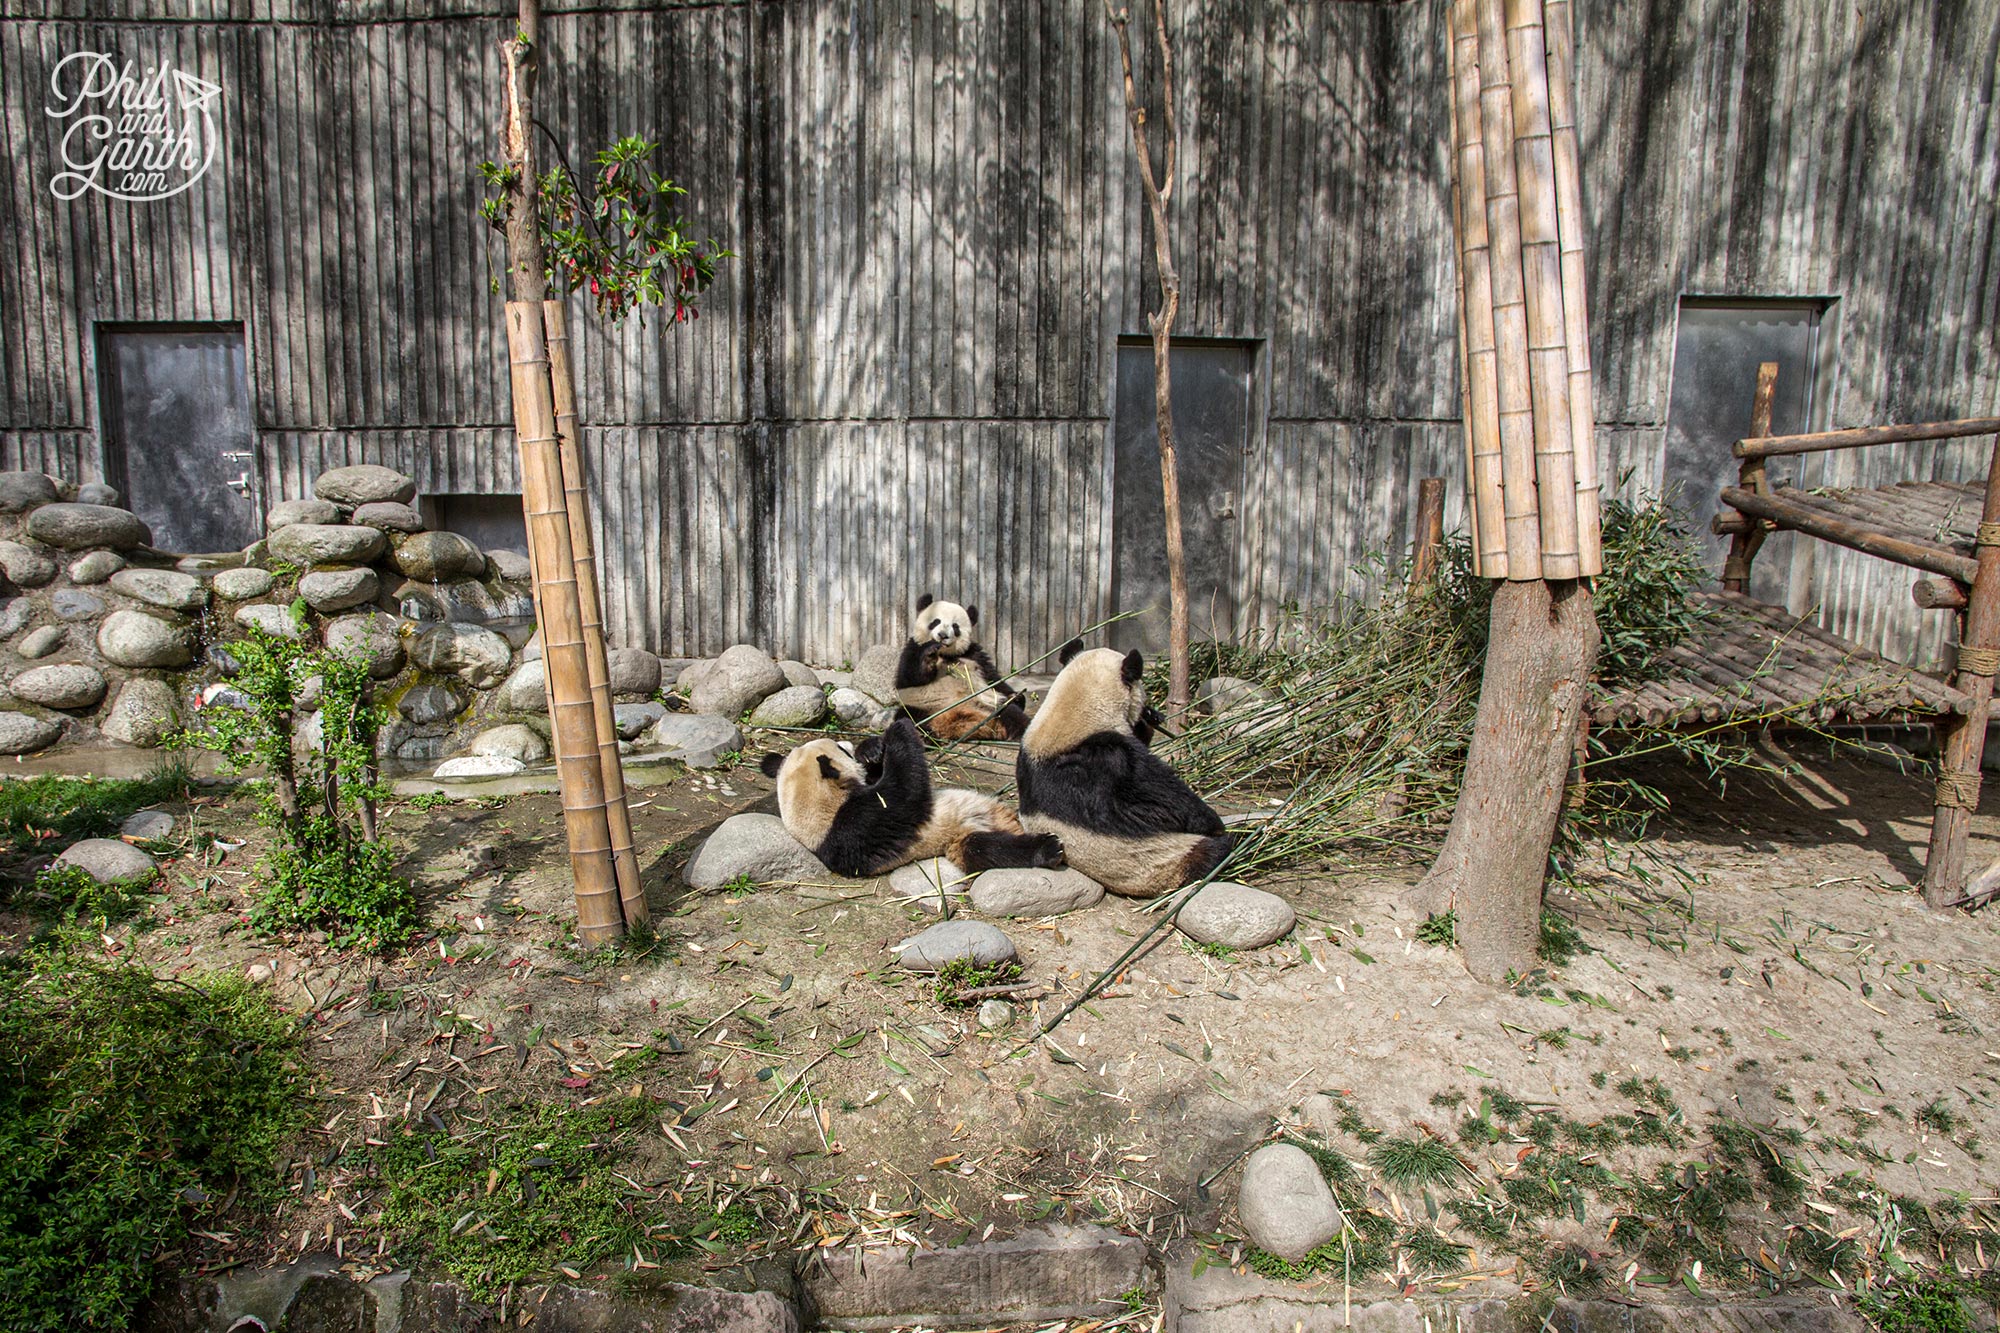 Another panda enclosure